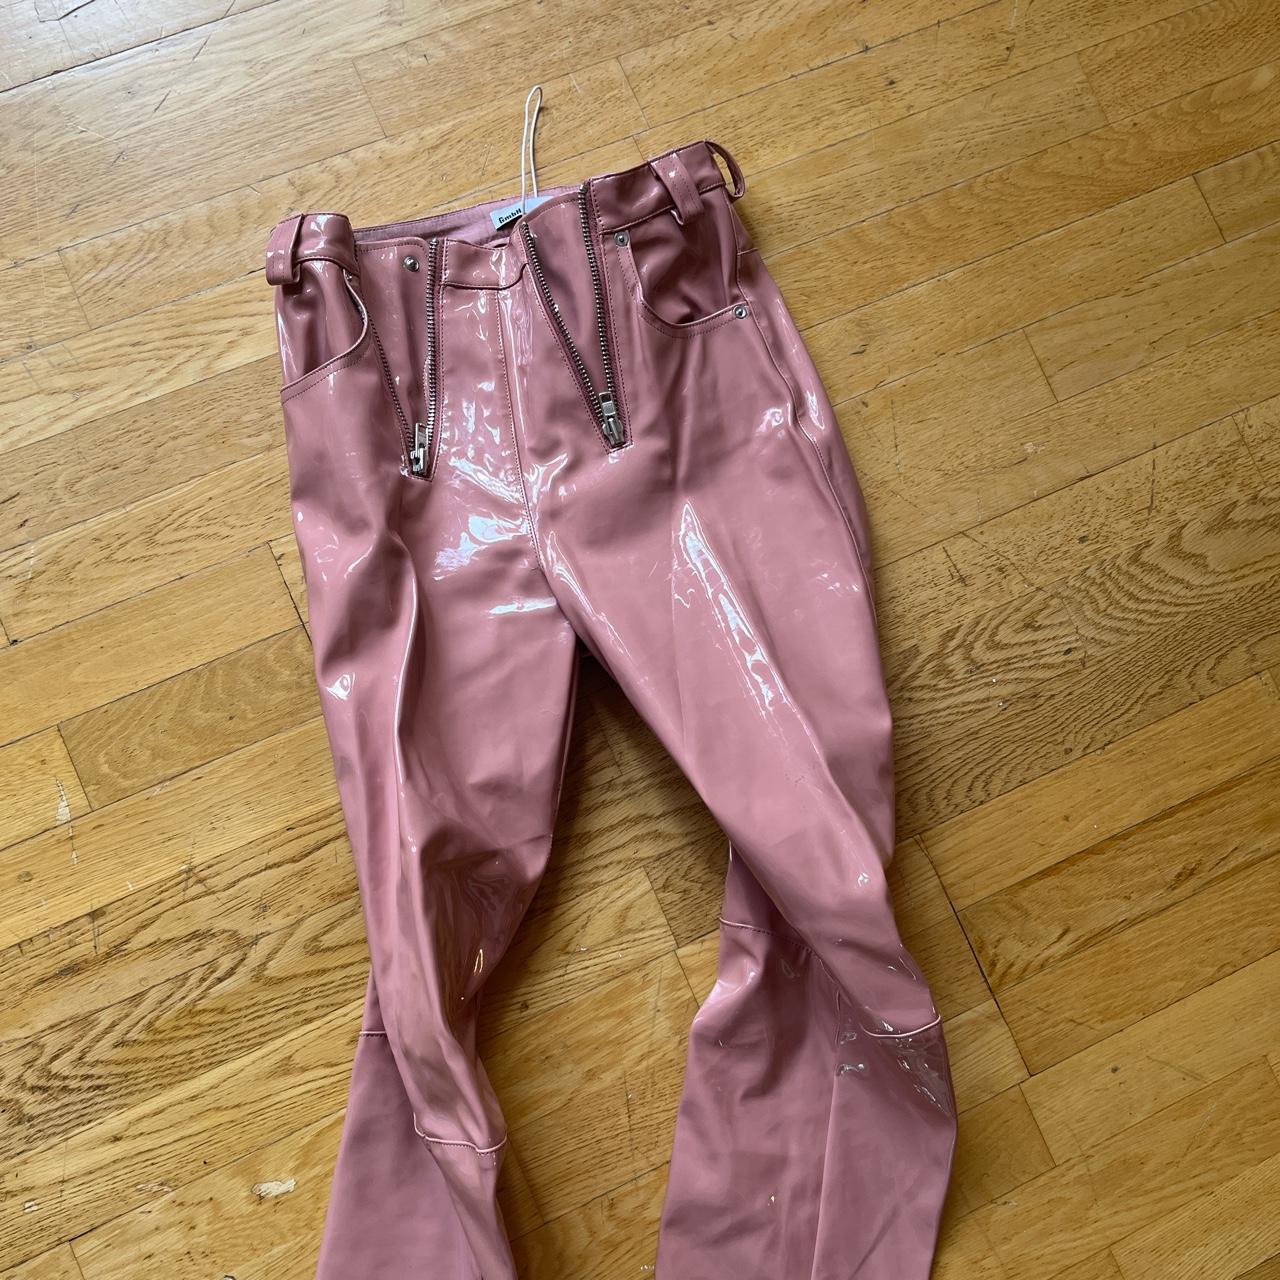 Product Image 2 - Rare GMBH PVA pants
Waist 26/